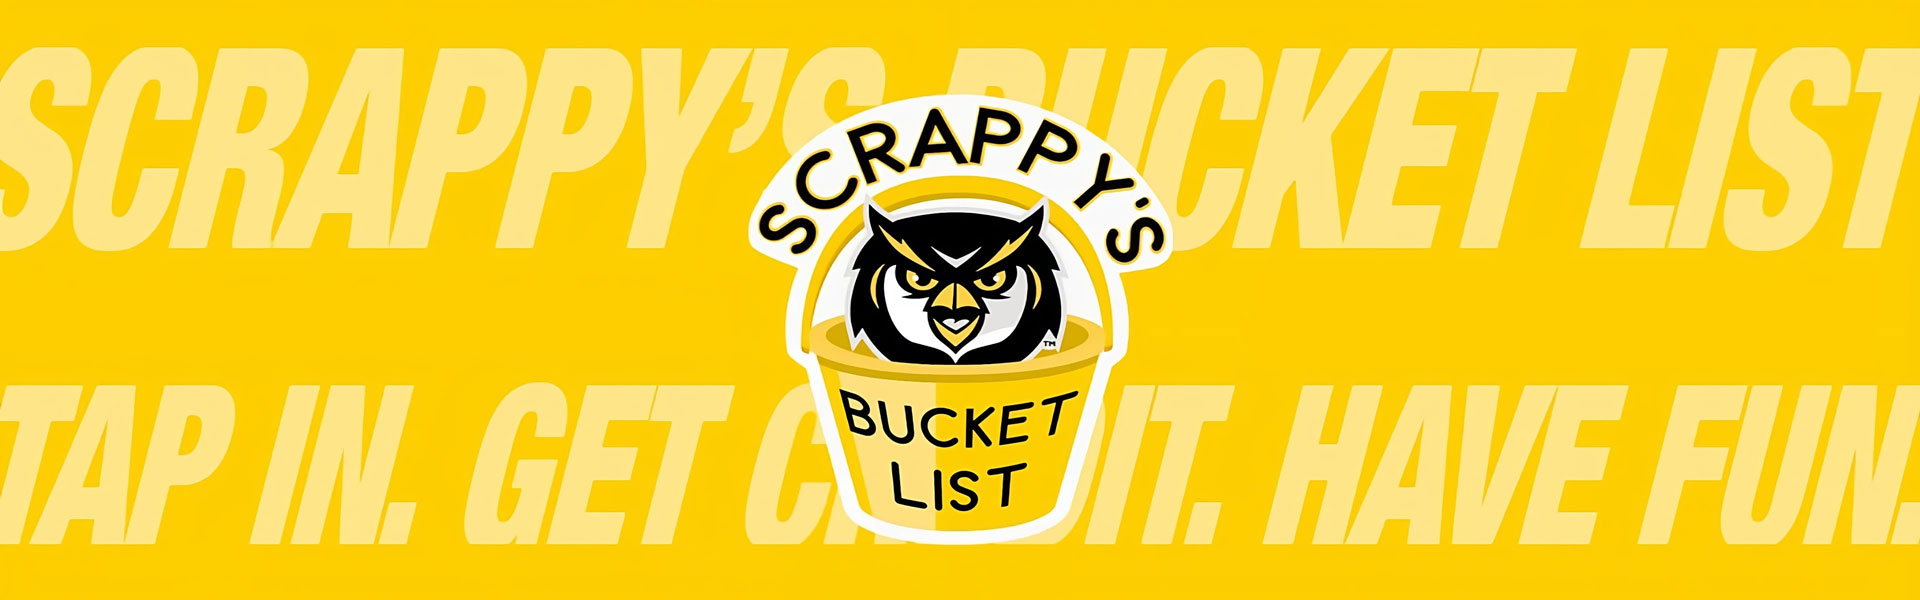 Scrappy's Bucket List Banner.